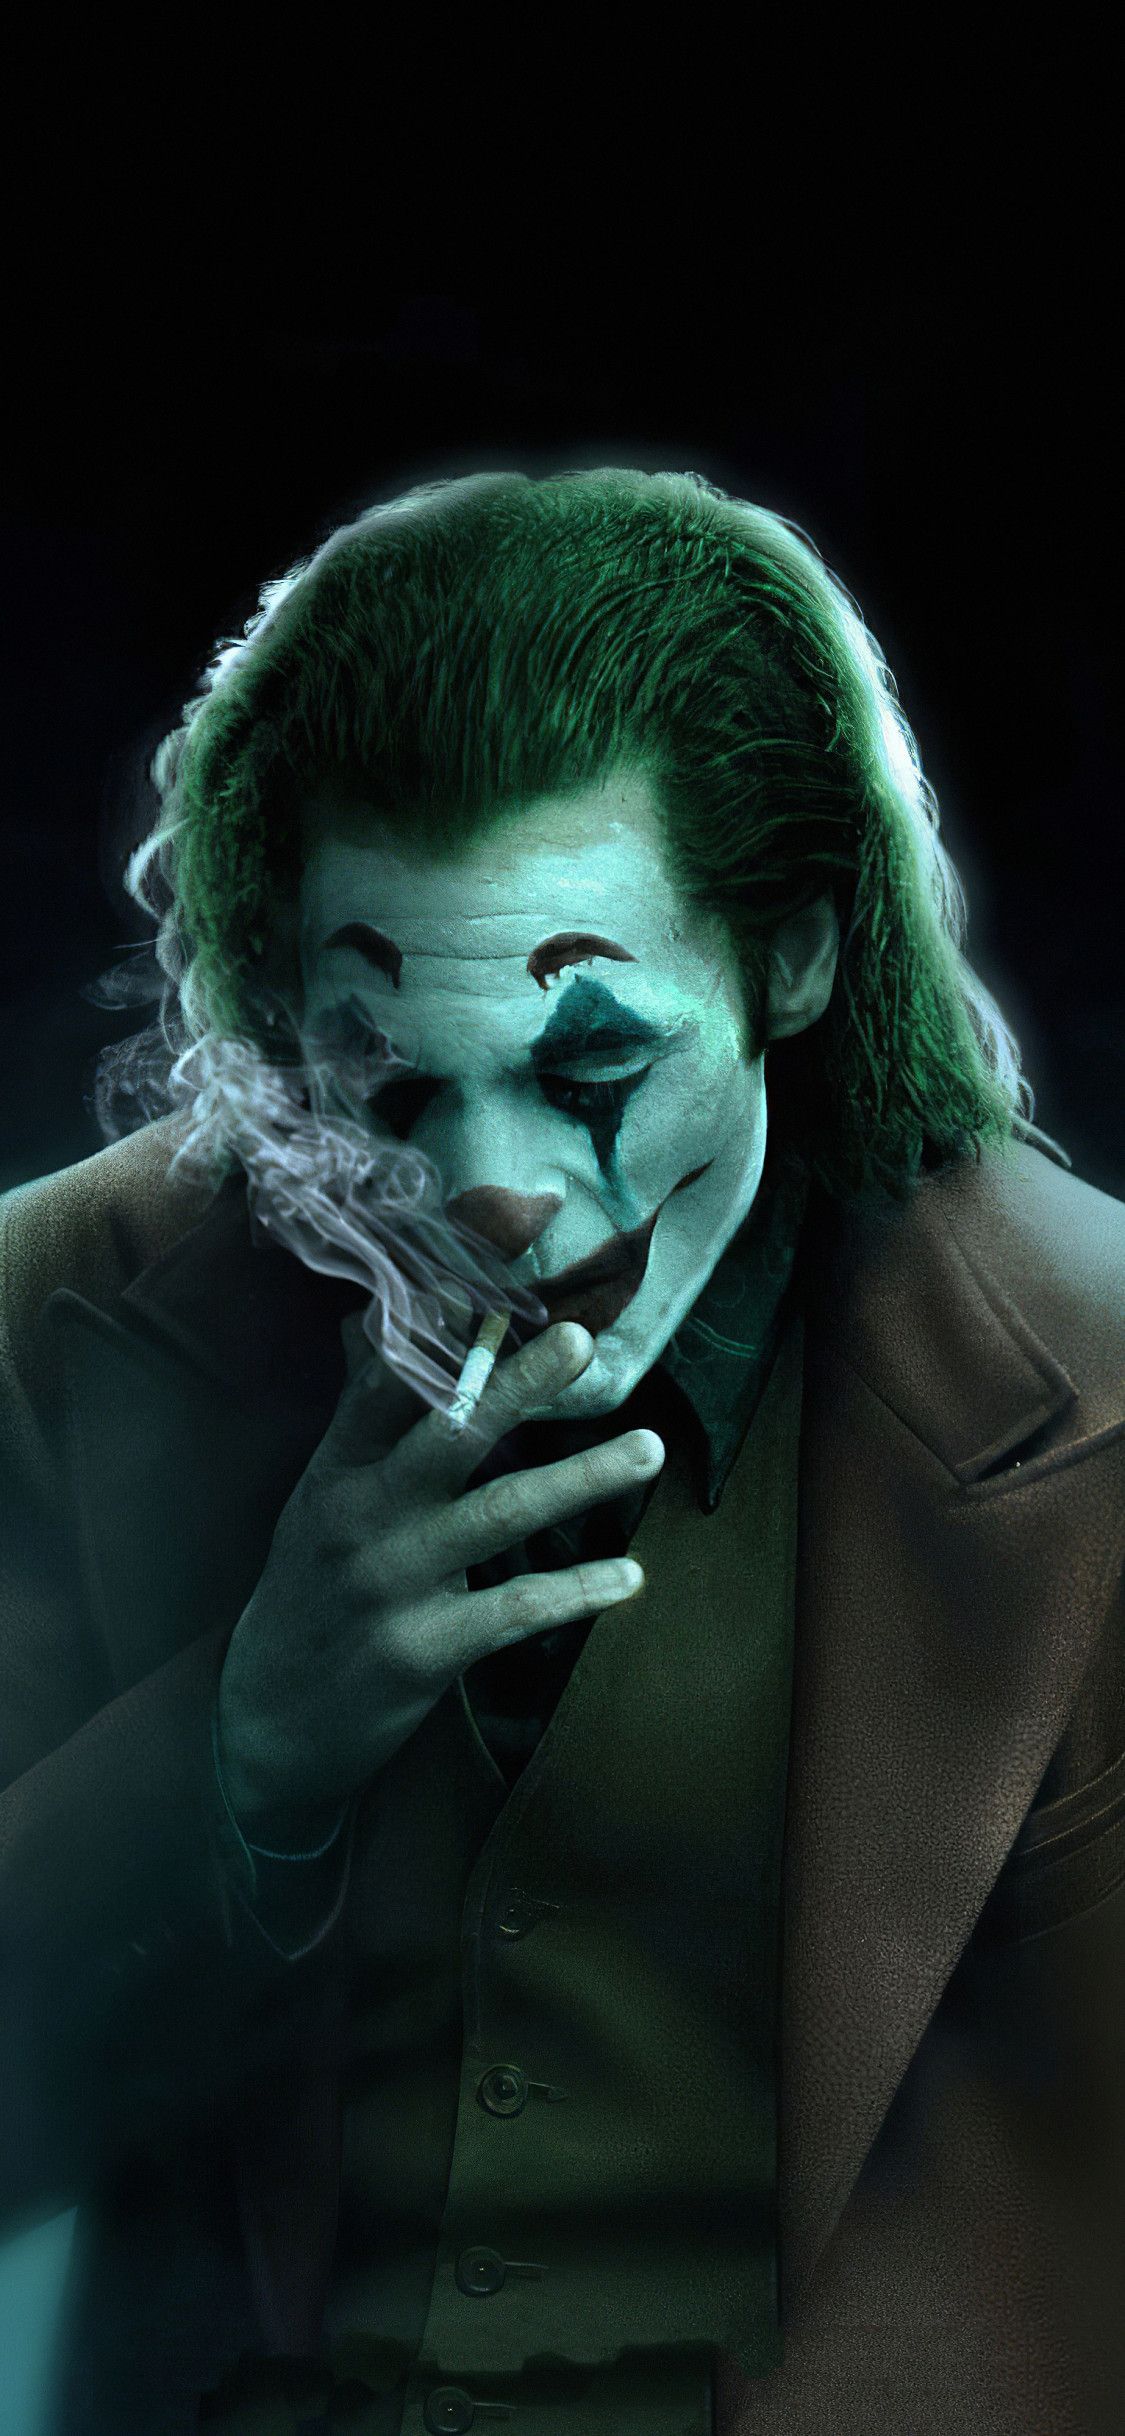 Joker Smoker Art 4k iPhone XS, iPhone iPhone X HD 4k